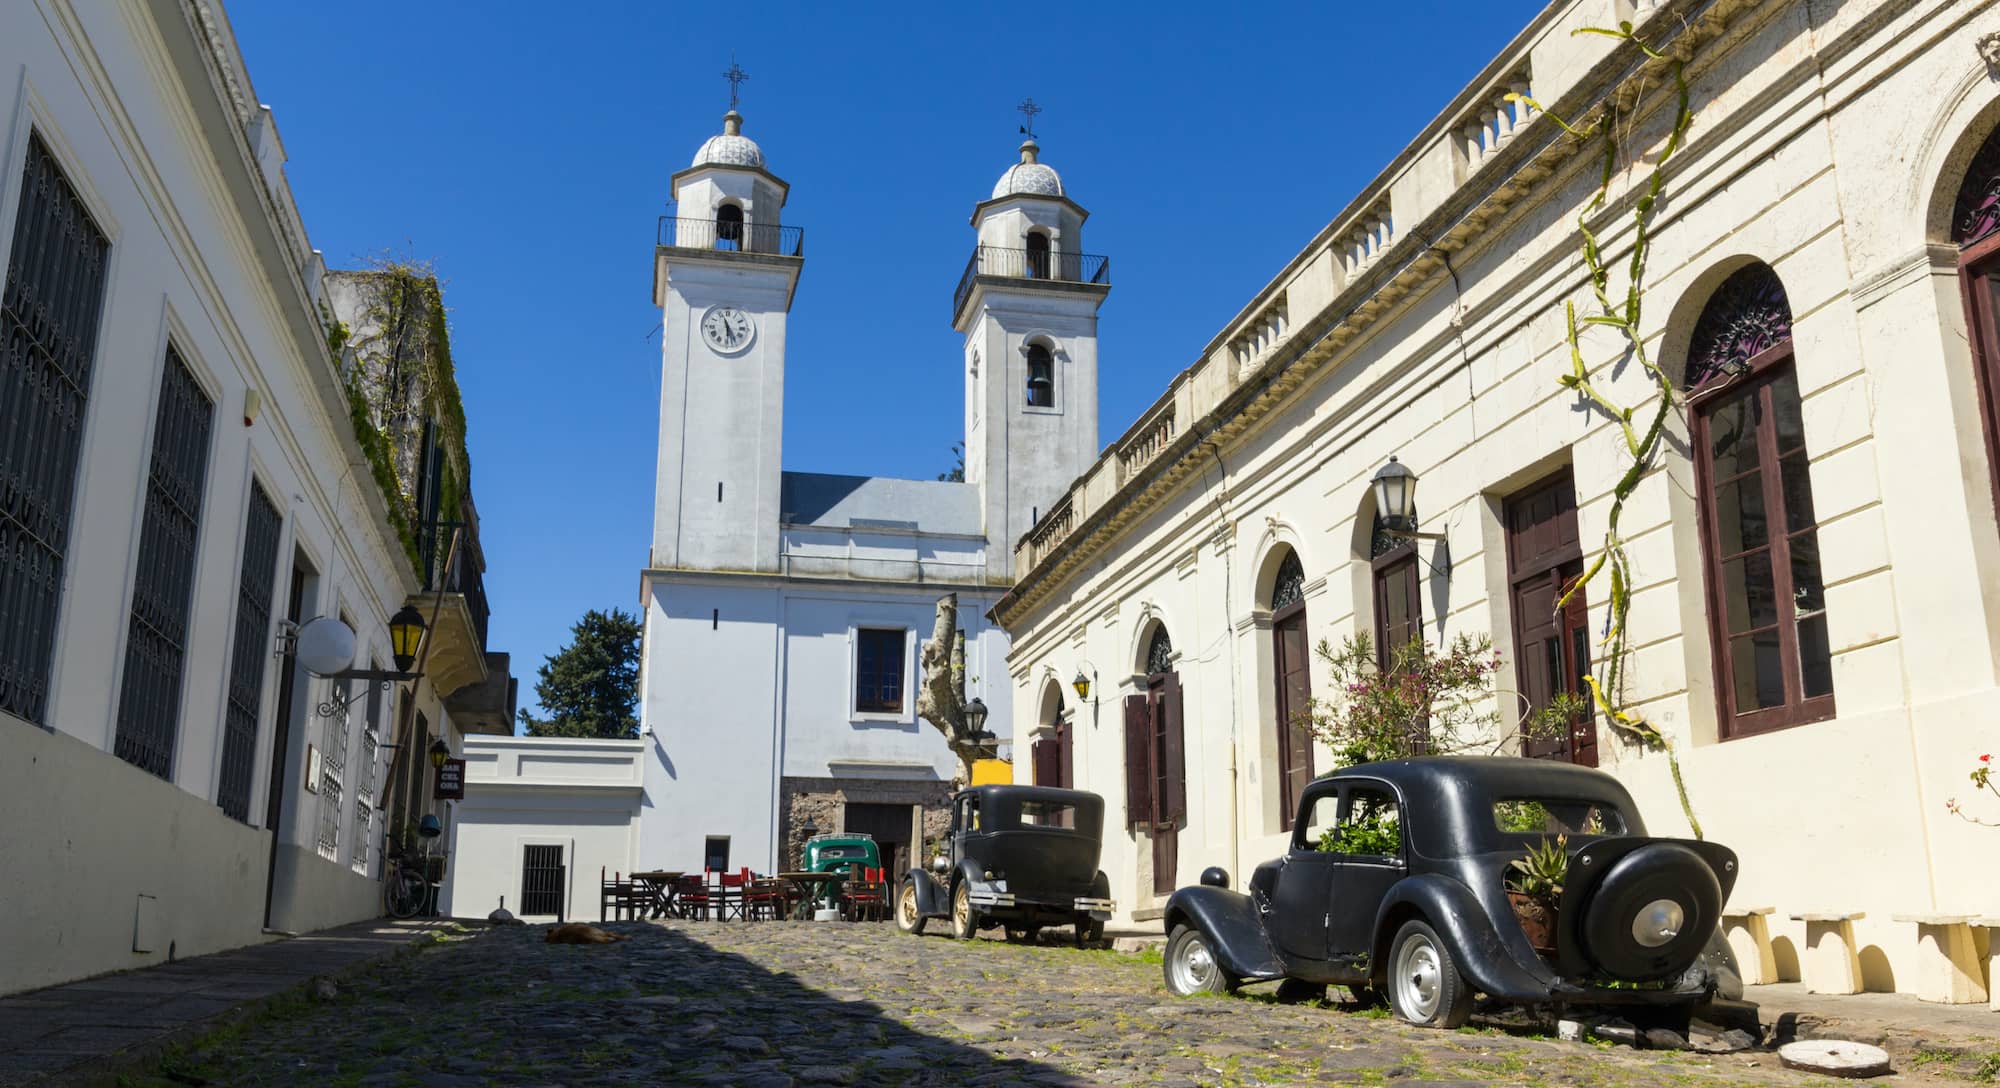 Obsolete cars, in front of the church of Colonia del Sacramento, Uruguay